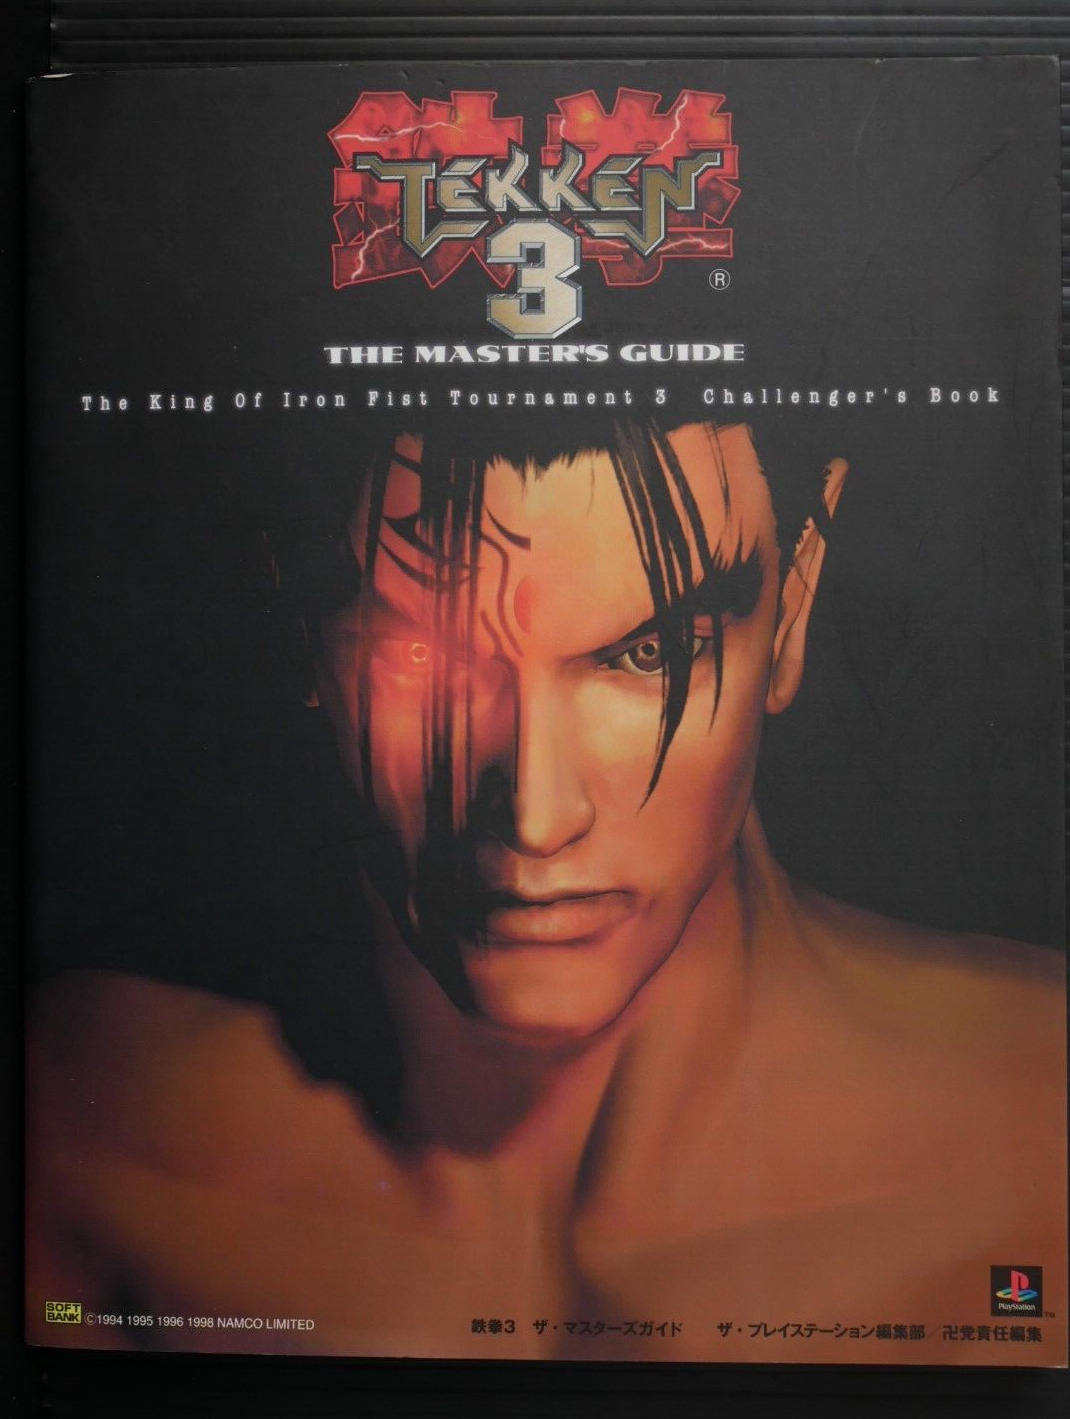 SHOHAN: Tekken 3 The Master's Guide The King Of Iron Fist Tournament 3 Challenge